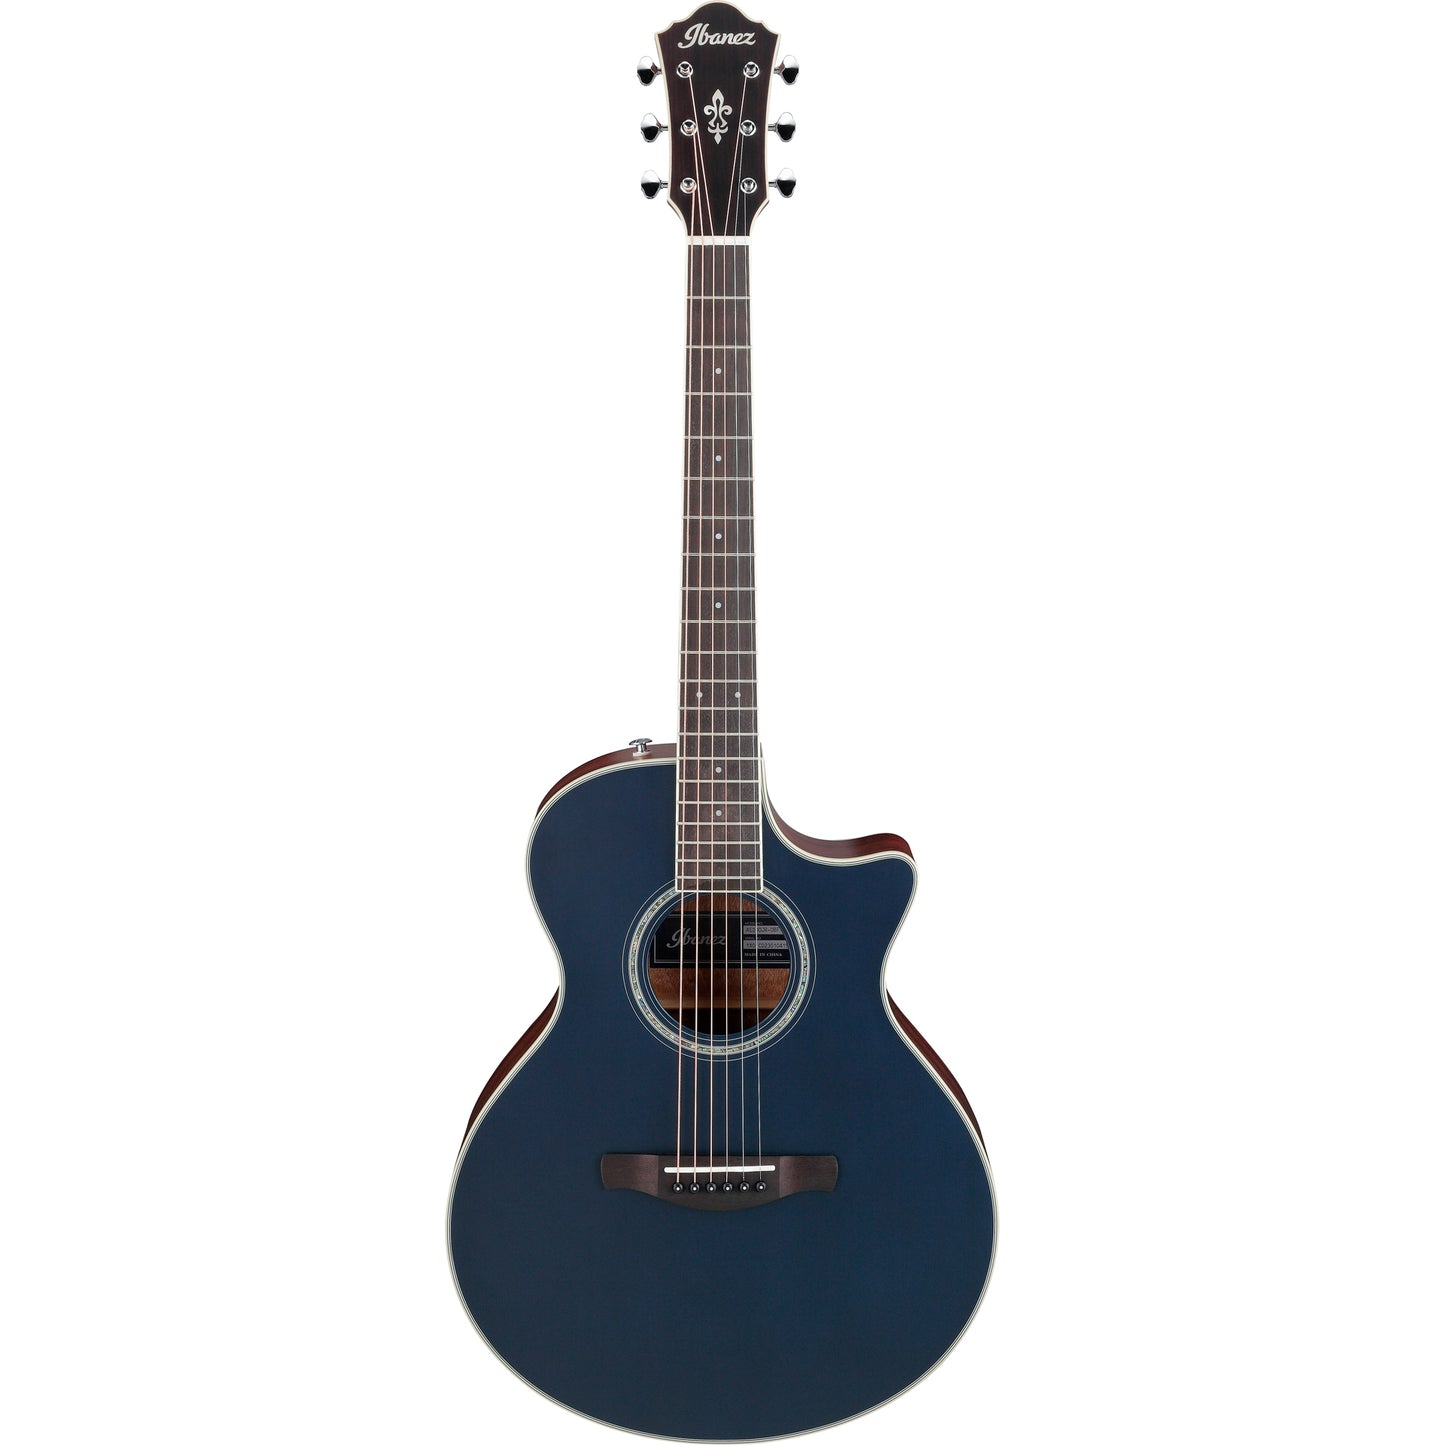 Ibanez AE200JR 6 String Acoustic Electric Guitar - Dark Tide Blue Flat